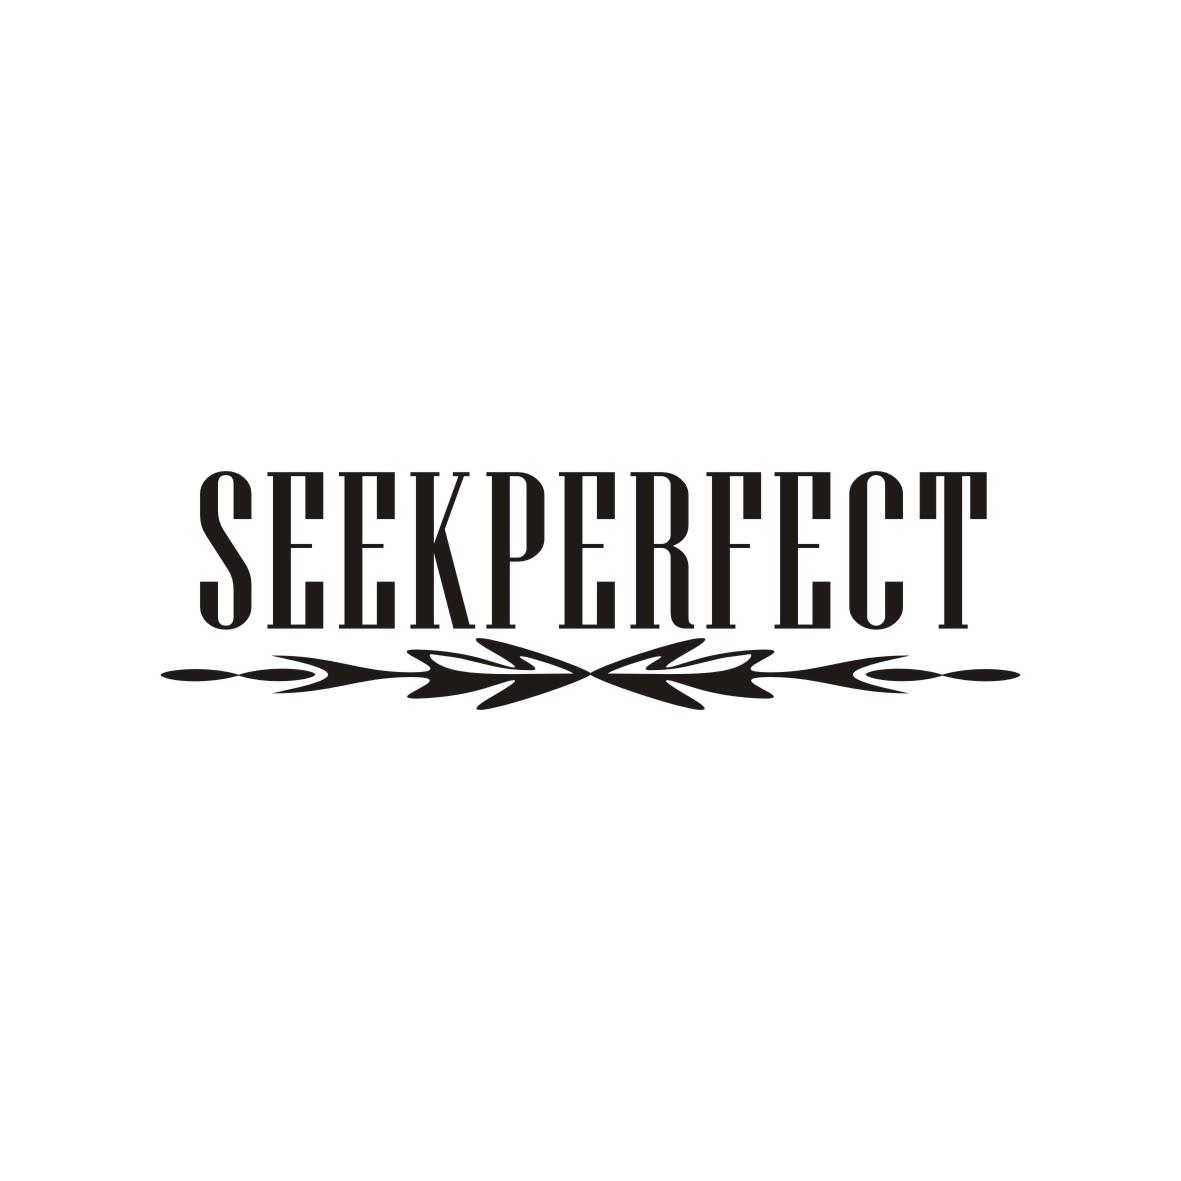 SEEKPERFECT贵金属合金商标转让费用买卖交易流程